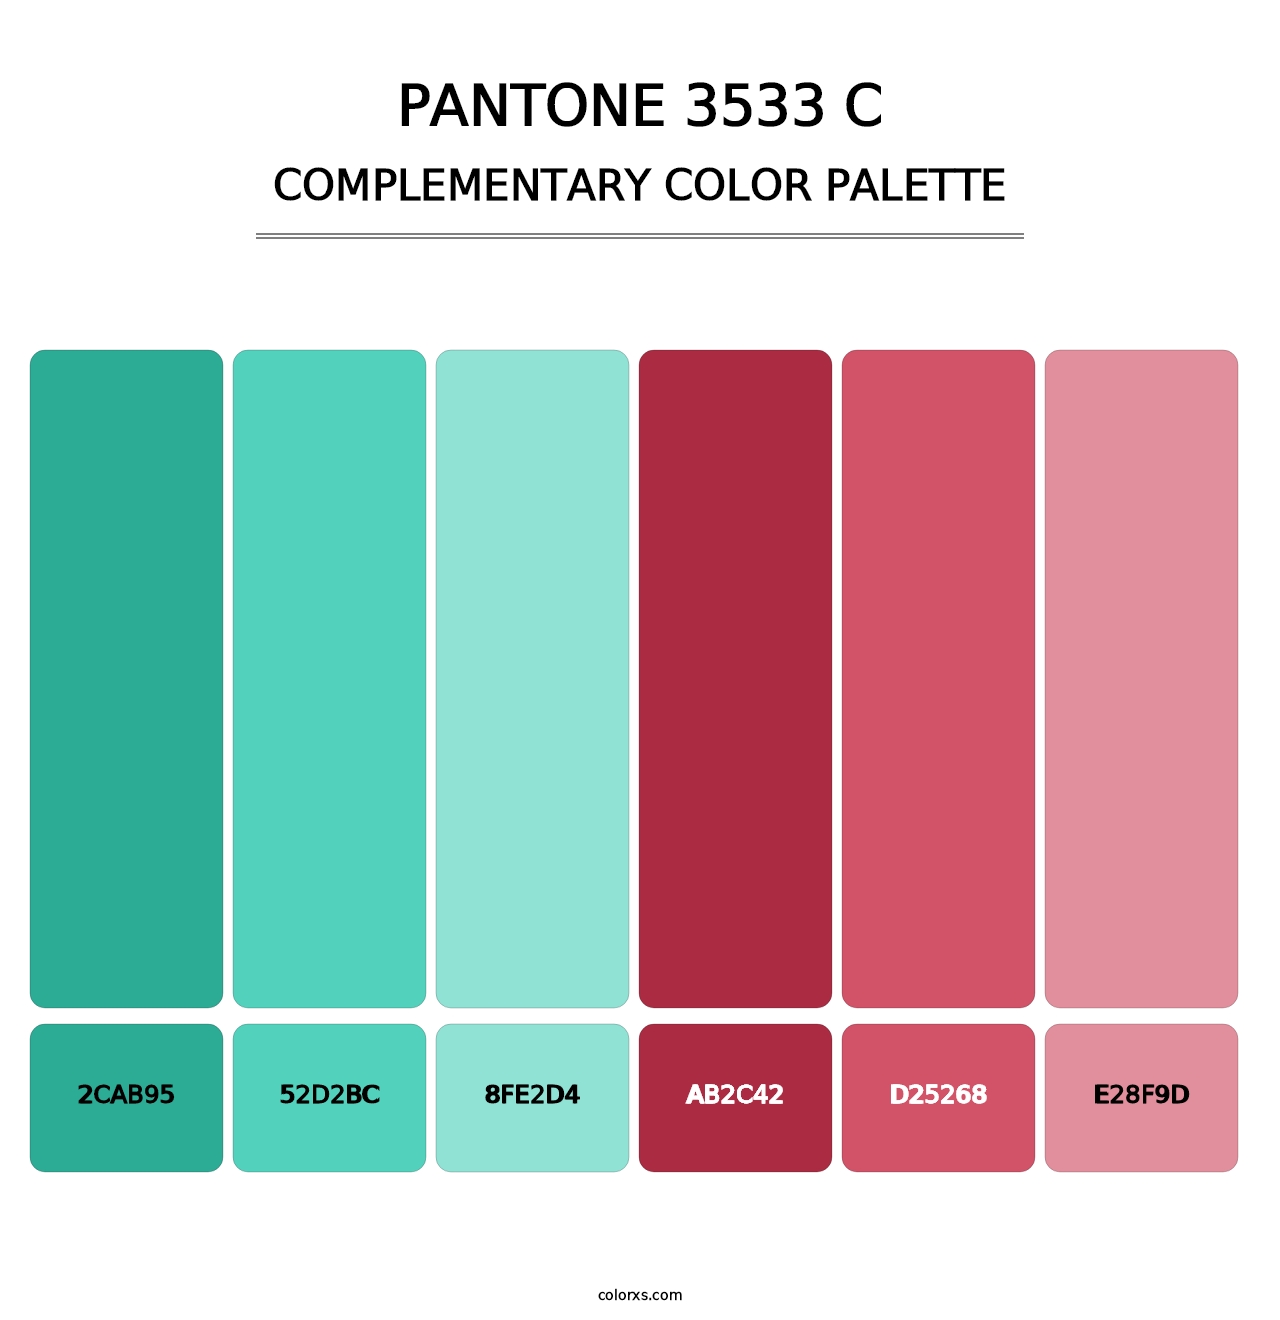 PANTONE 3533 C - Complementary Color Palette